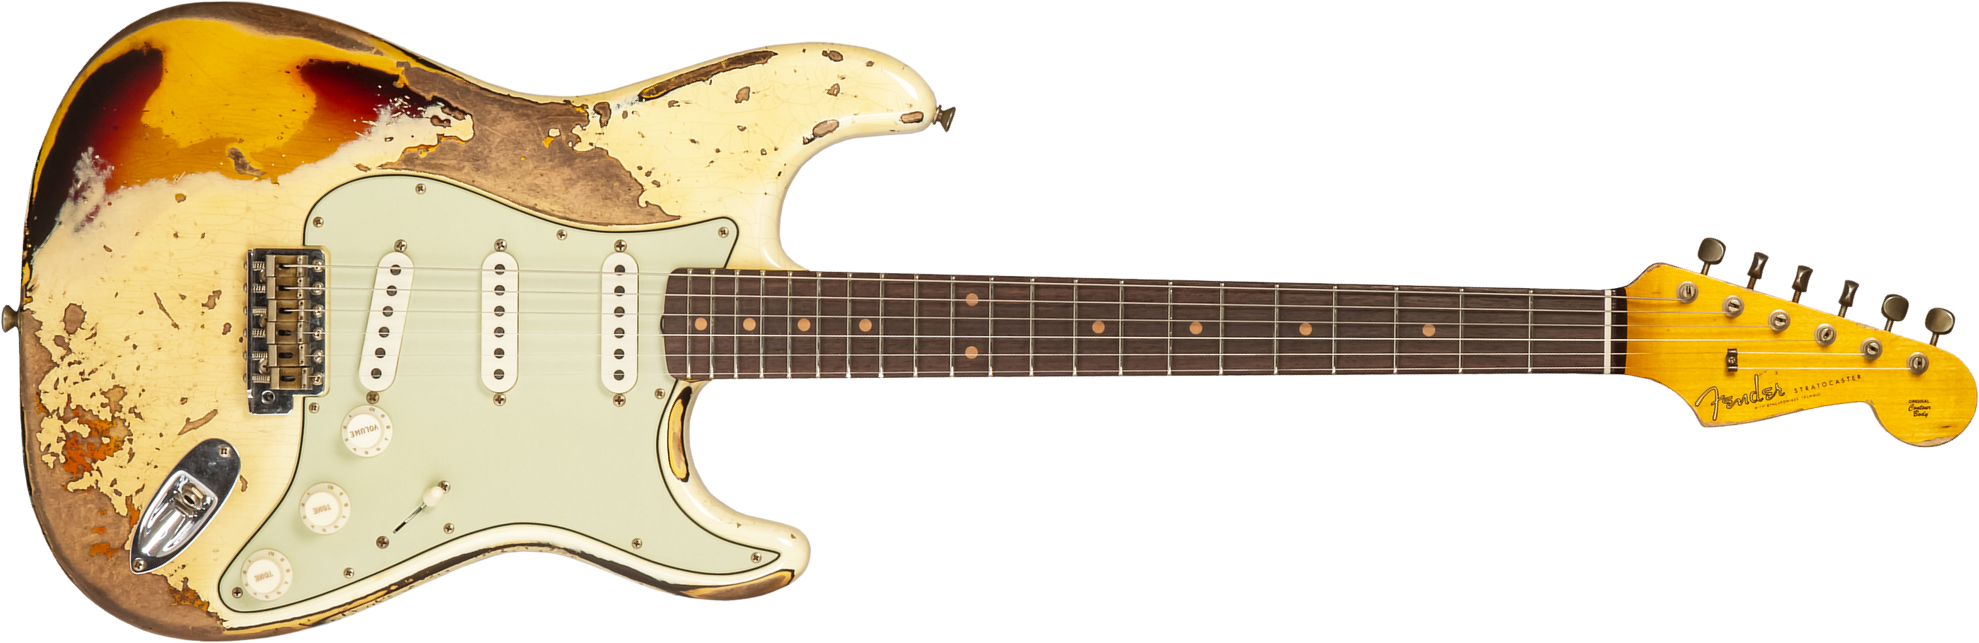 Fender Custom Shop Strat 1959 3s Trem Rw #cz576436 - Super Heavy Relic Vintage White O. 3-color Sunburs - Elektrische gitaar in Str-vorm - Main pictur